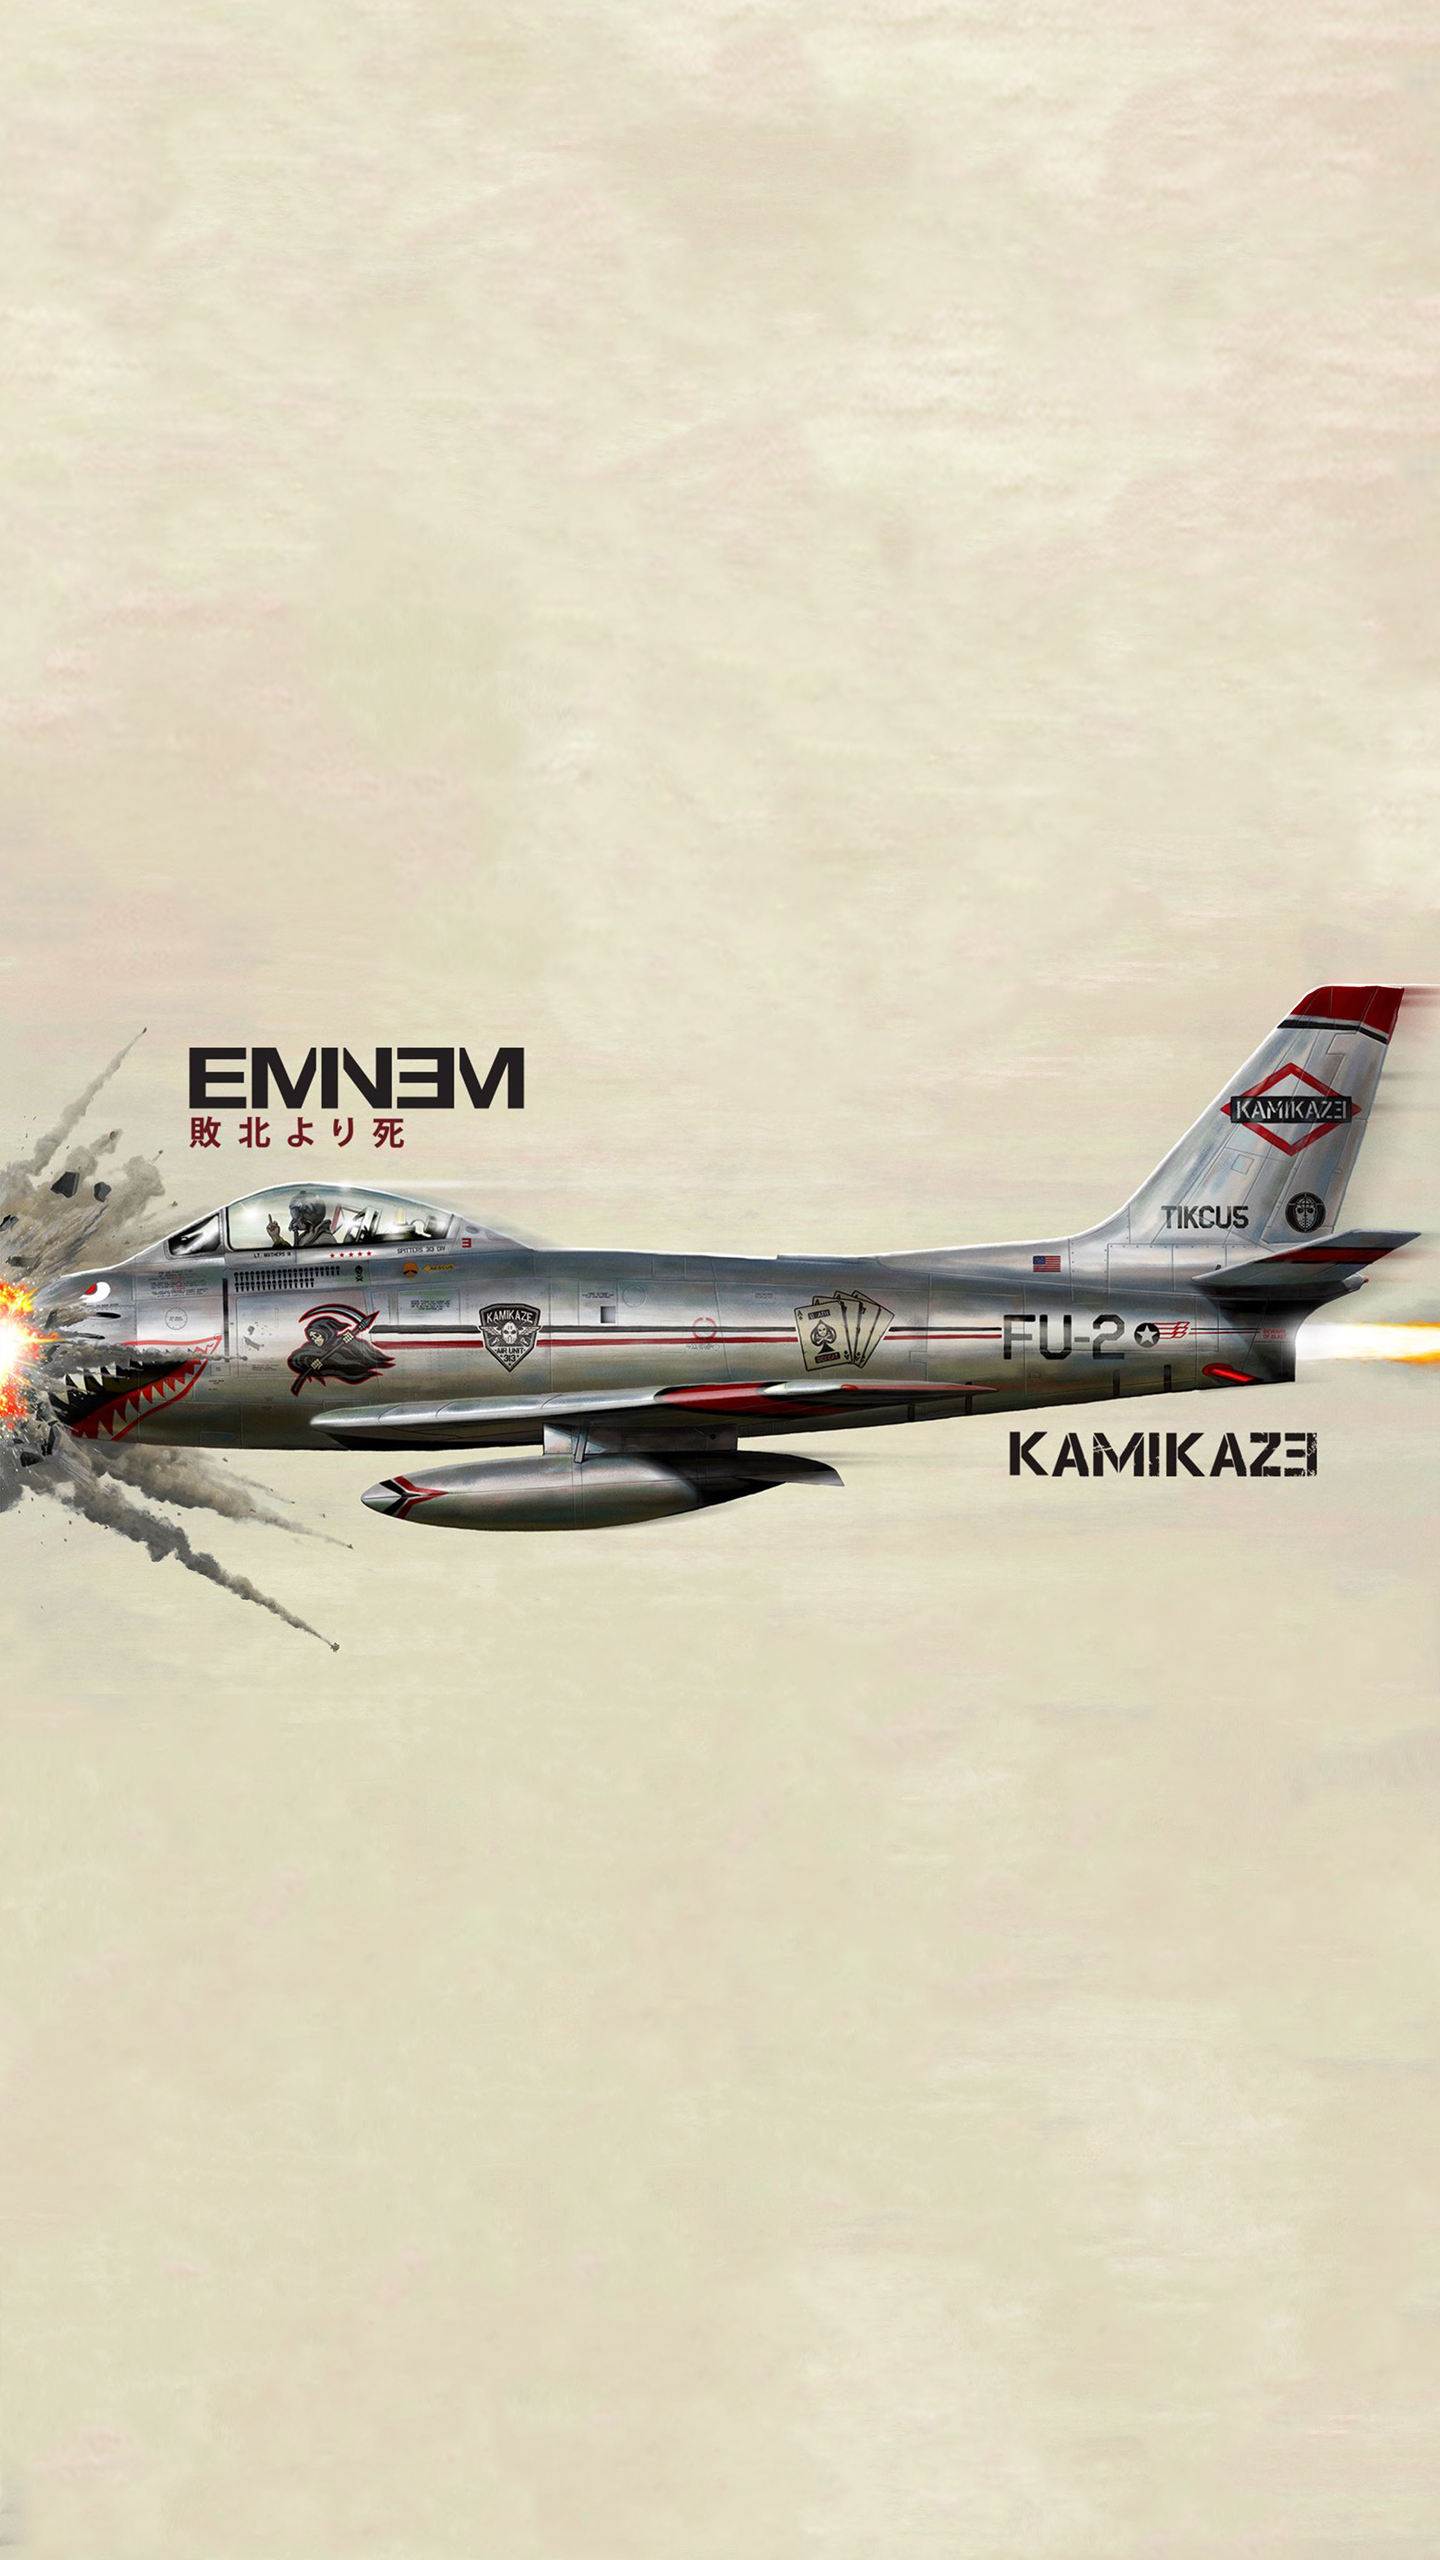 [28+] Eminem Kamikaze Wallpapers on WallpaperSafari1440 x 2560